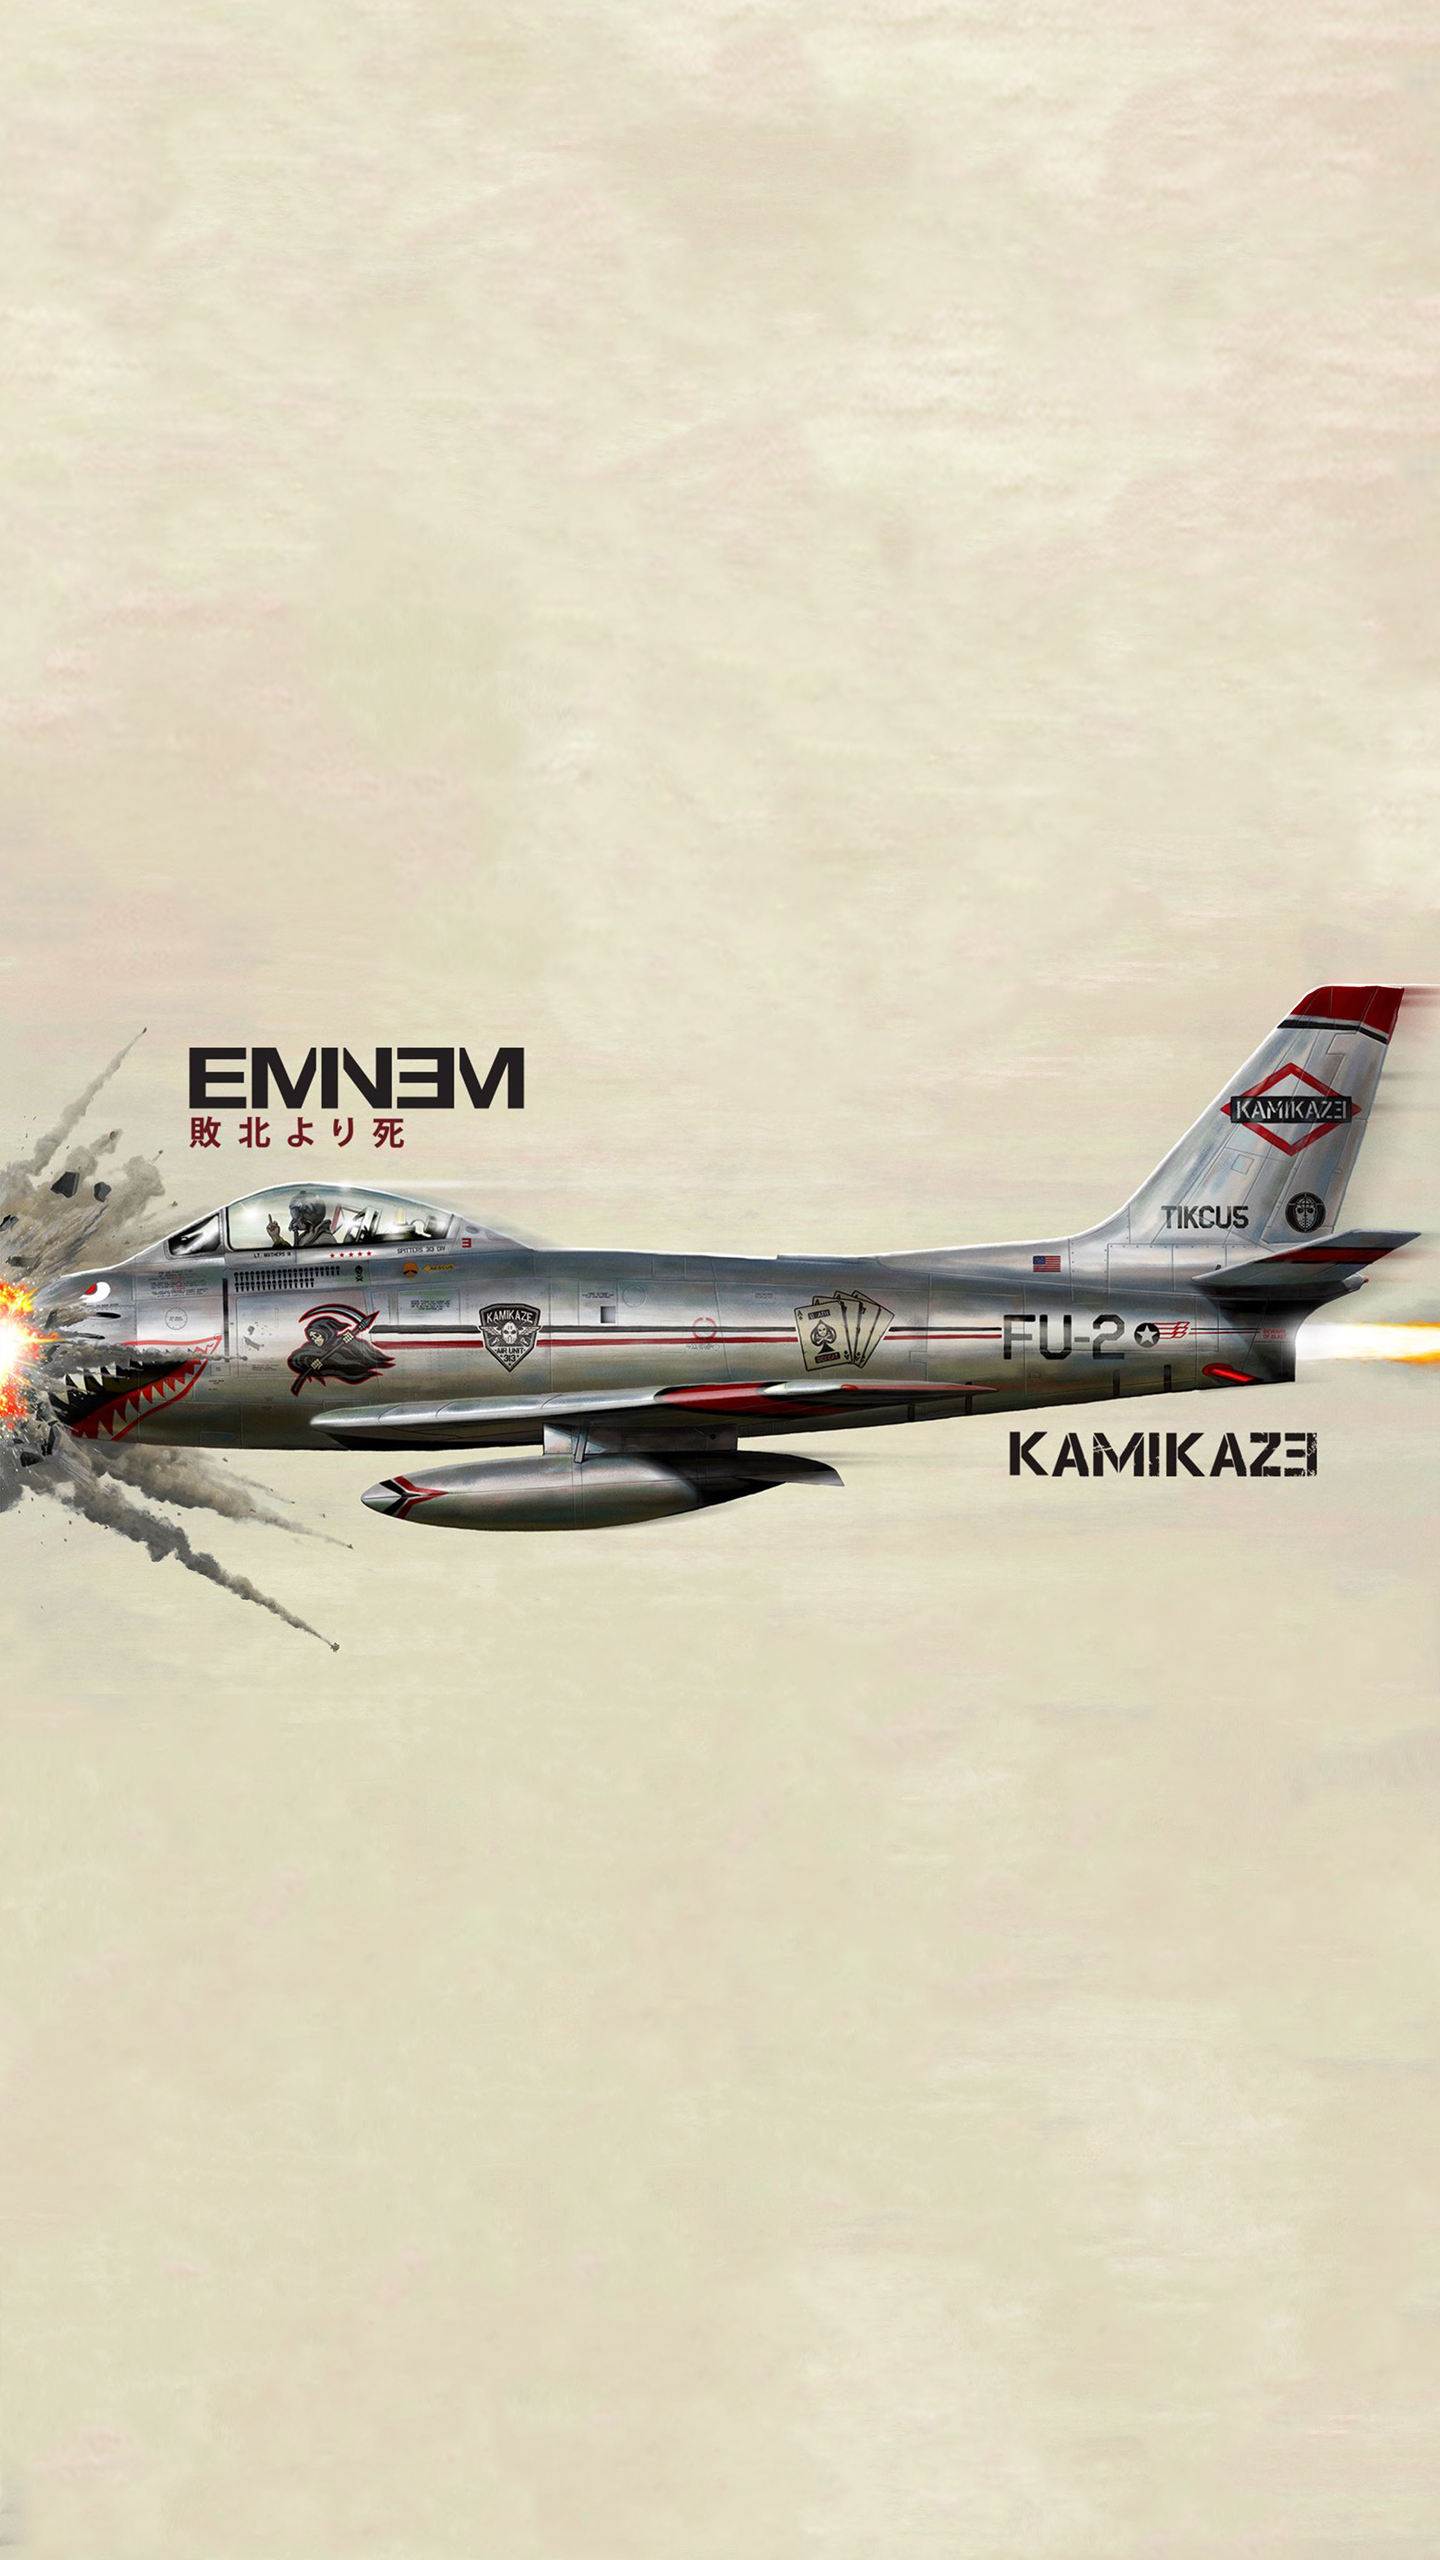 [28+] Eminem Kamikaze Wallpapers on WallpaperSafari1440 x 2560